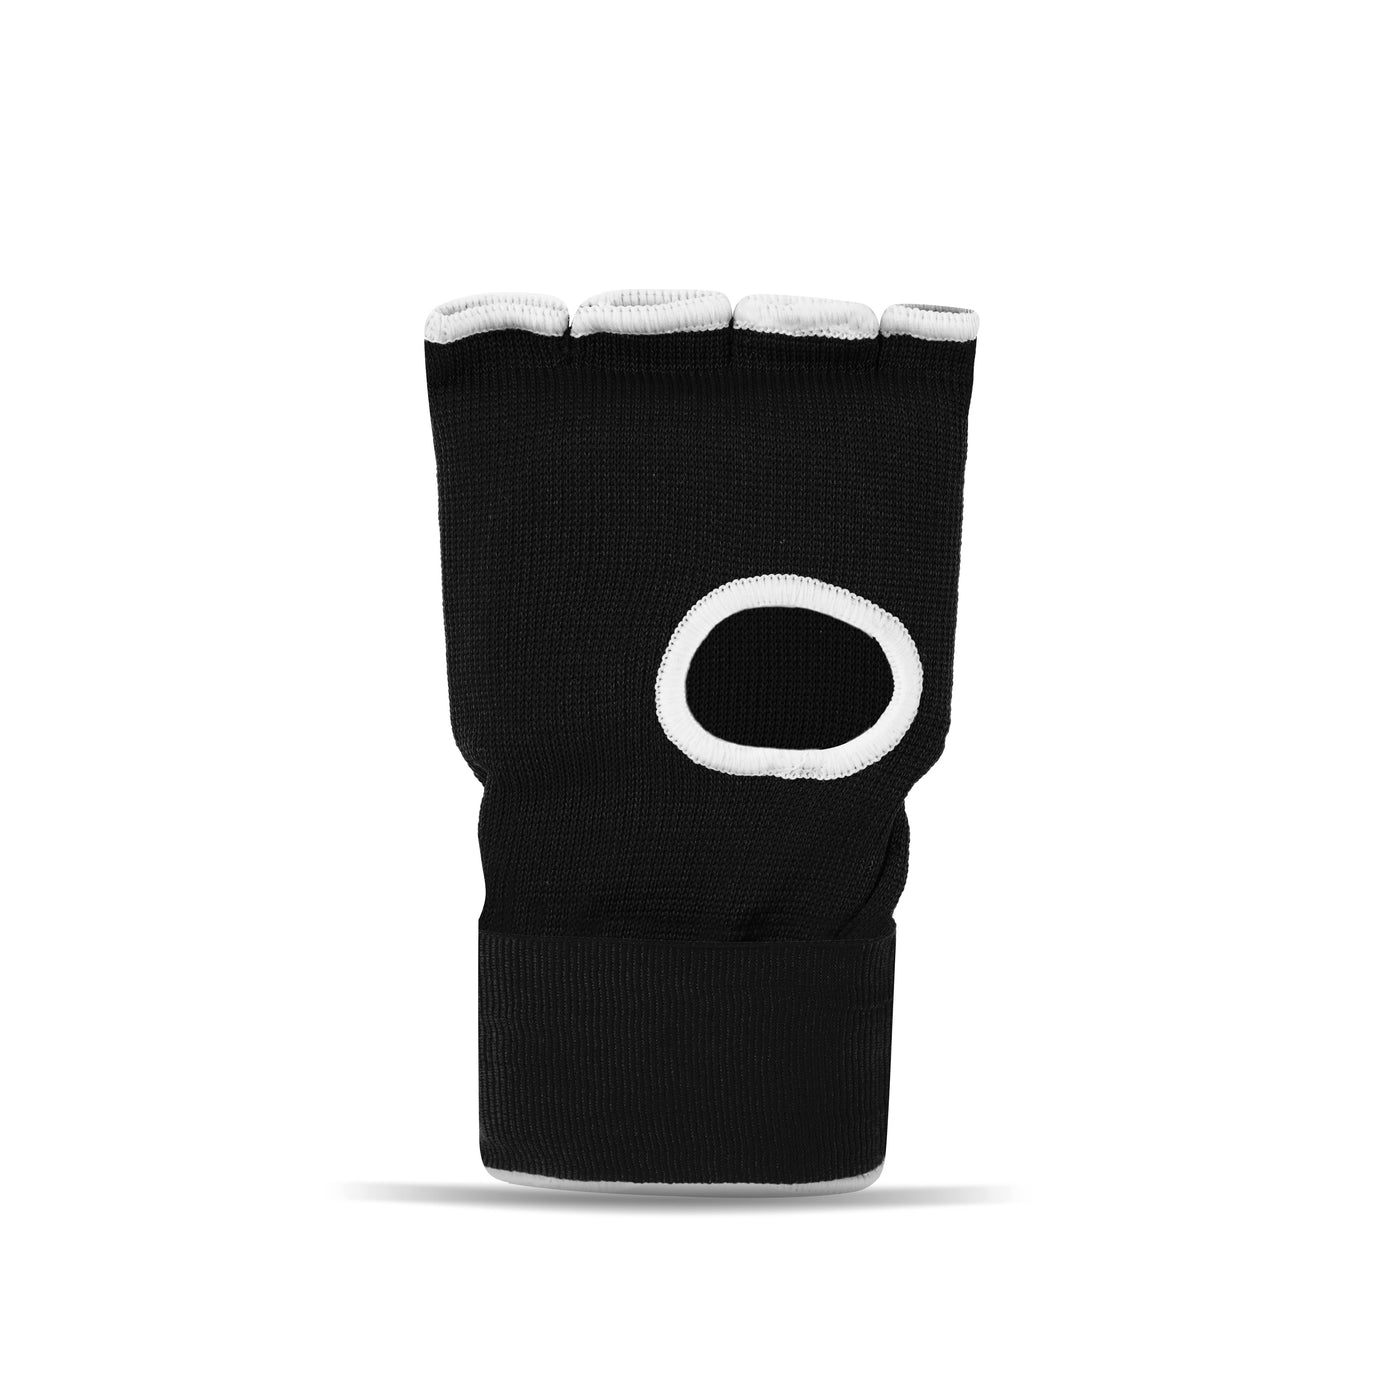 Black Inner Gel Gloves With Strap